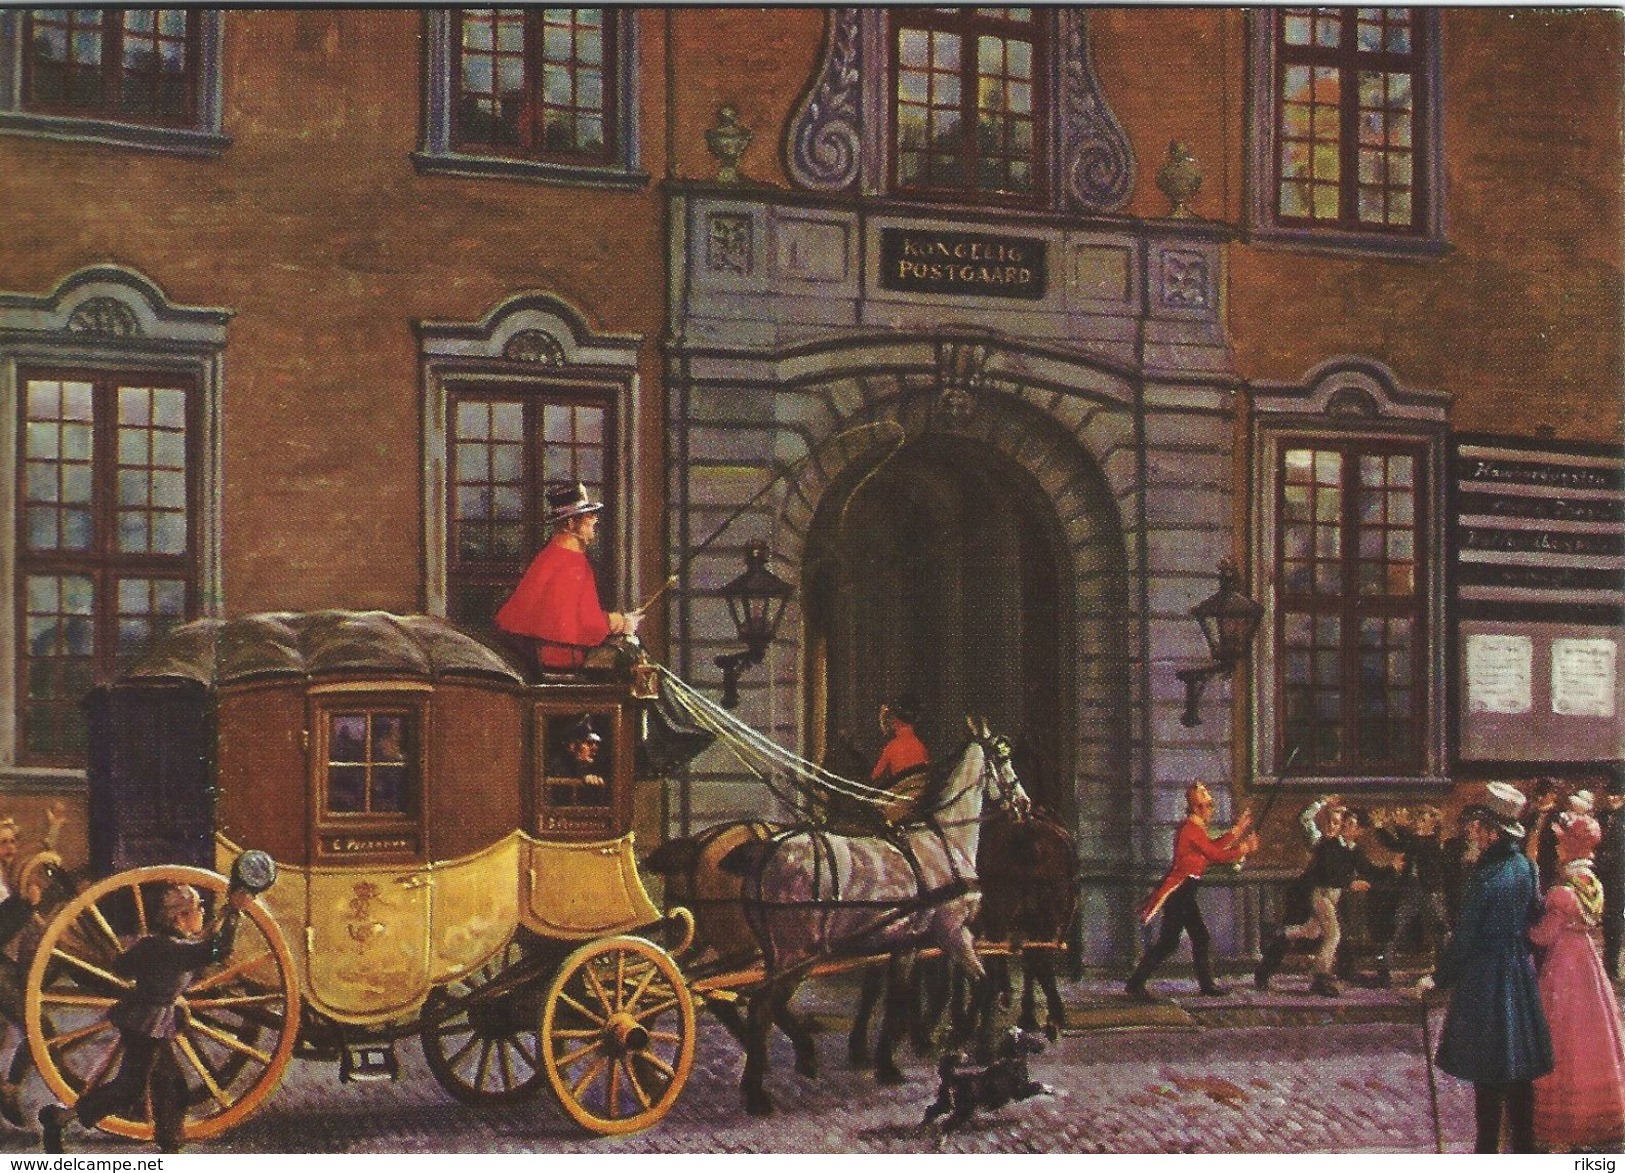 Old Postal Coach  - Postman & Horses - Rural Postman. Paintings  -  3 Cards.  Denmark   # 07331 - Postal Services